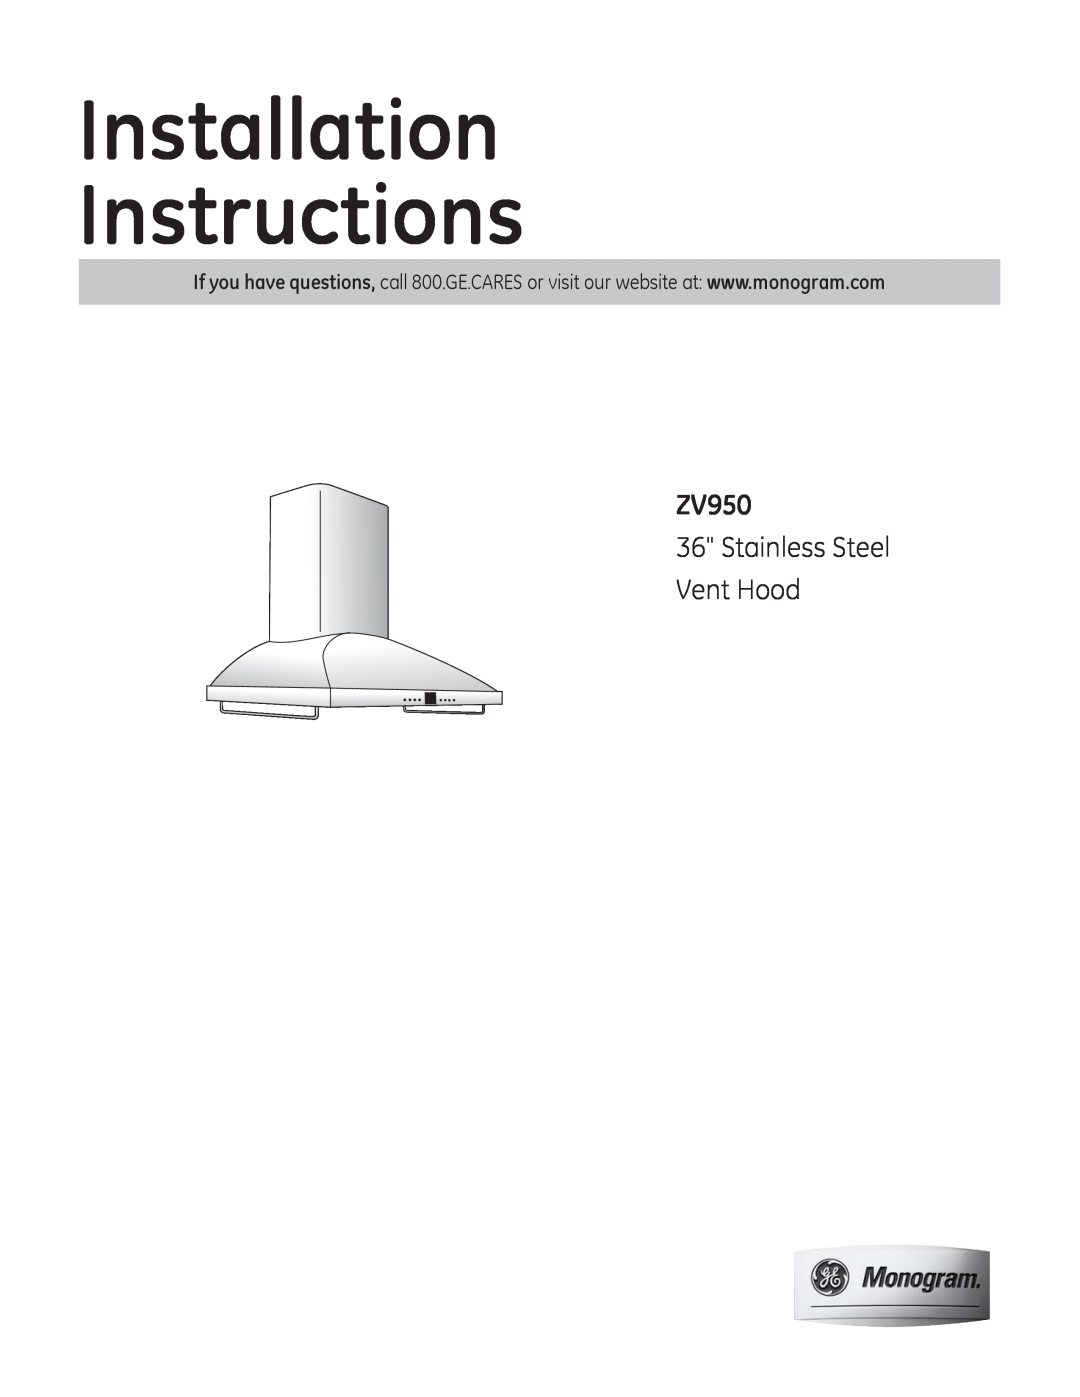 GE Monogram ZV950 installation instructions Installation Instructions, Stainless Steel Vent Hood 